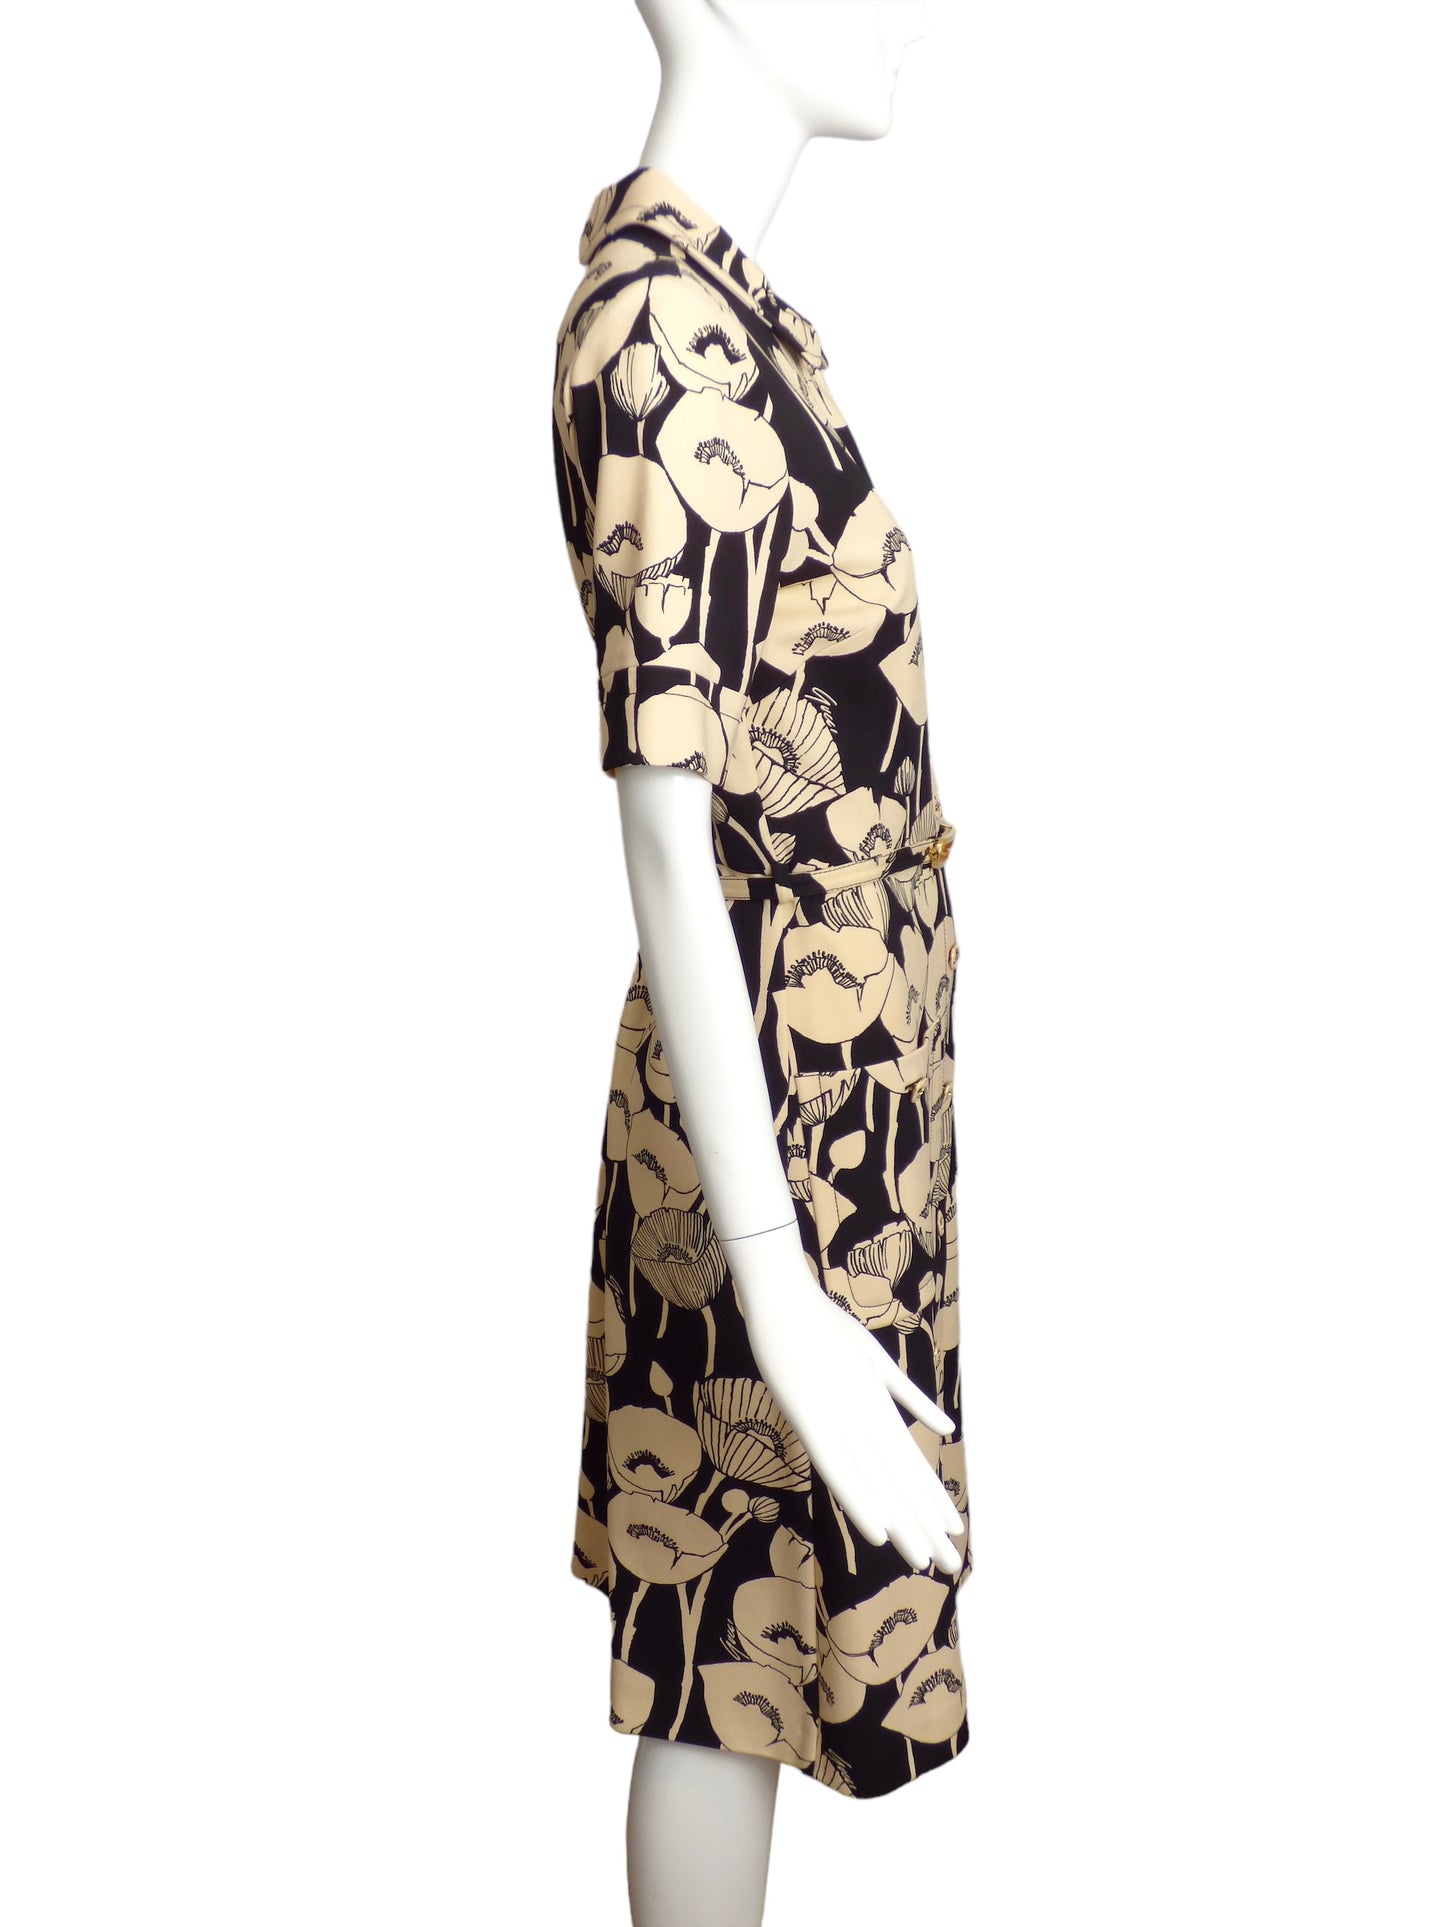 GUCCI- 2021 Black & Ivory Poppy Print Dress, Size 6